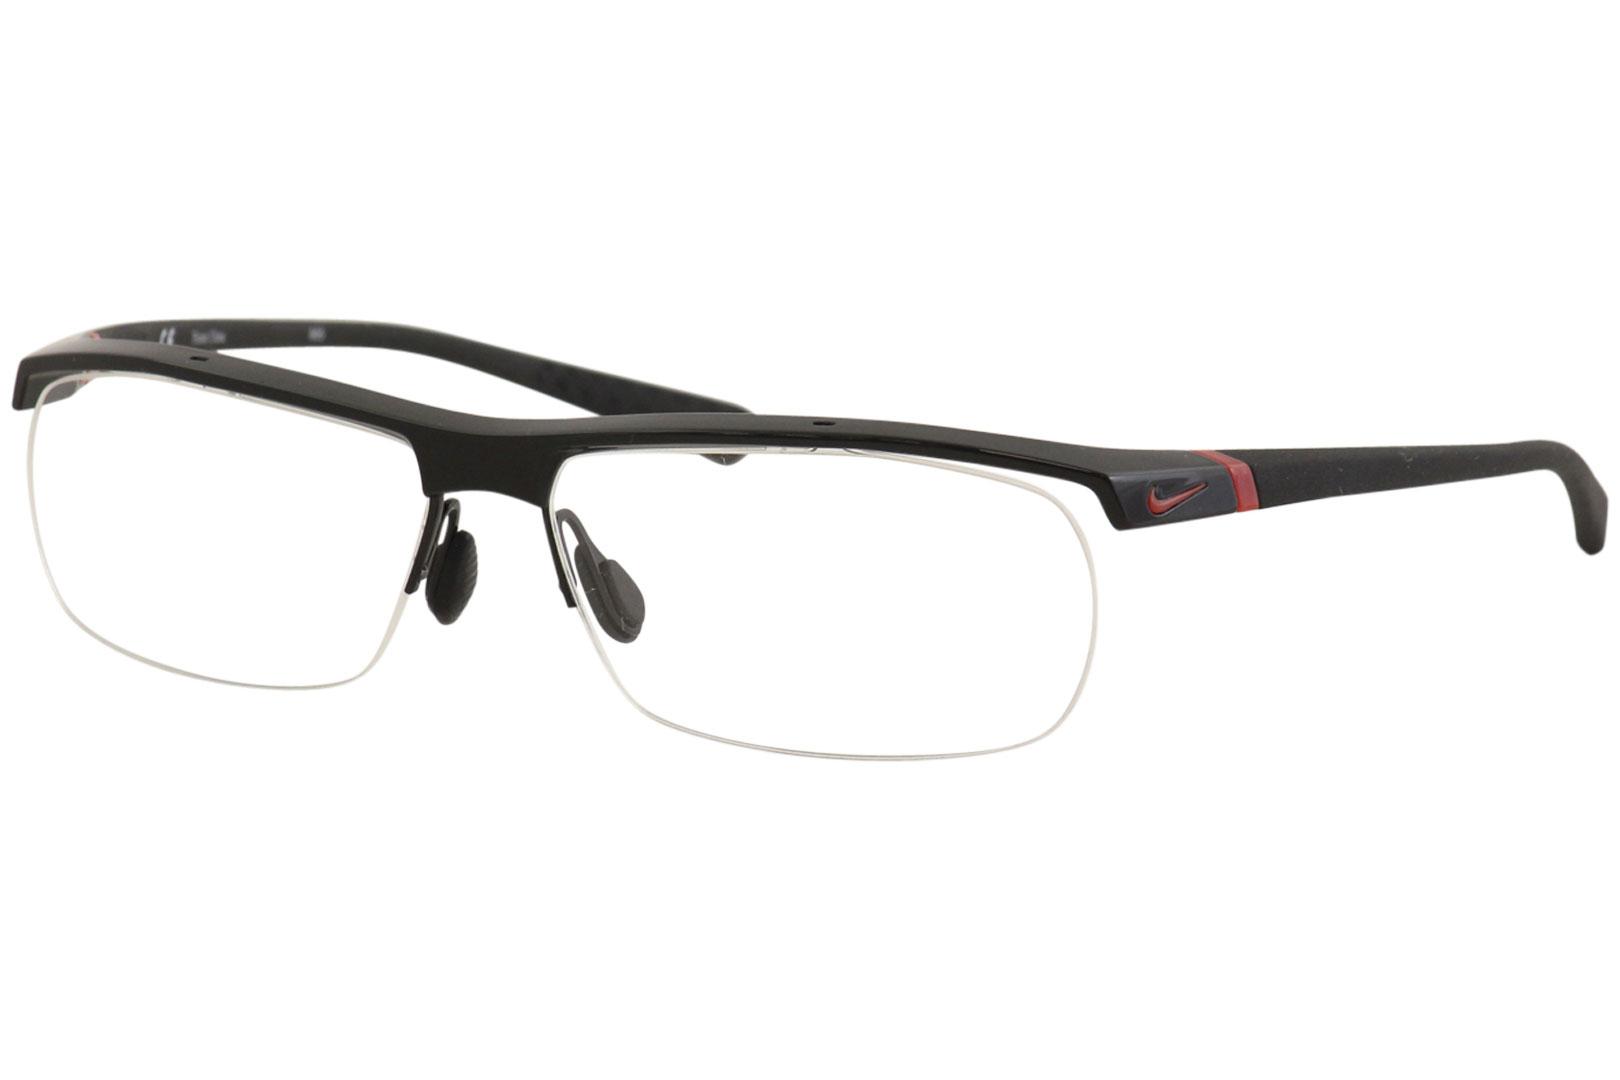 testimonio licencia salado Nike Men's Eyeglasses 7071/2 70712 Half Rim Optical Frame | EyeSpecs.com